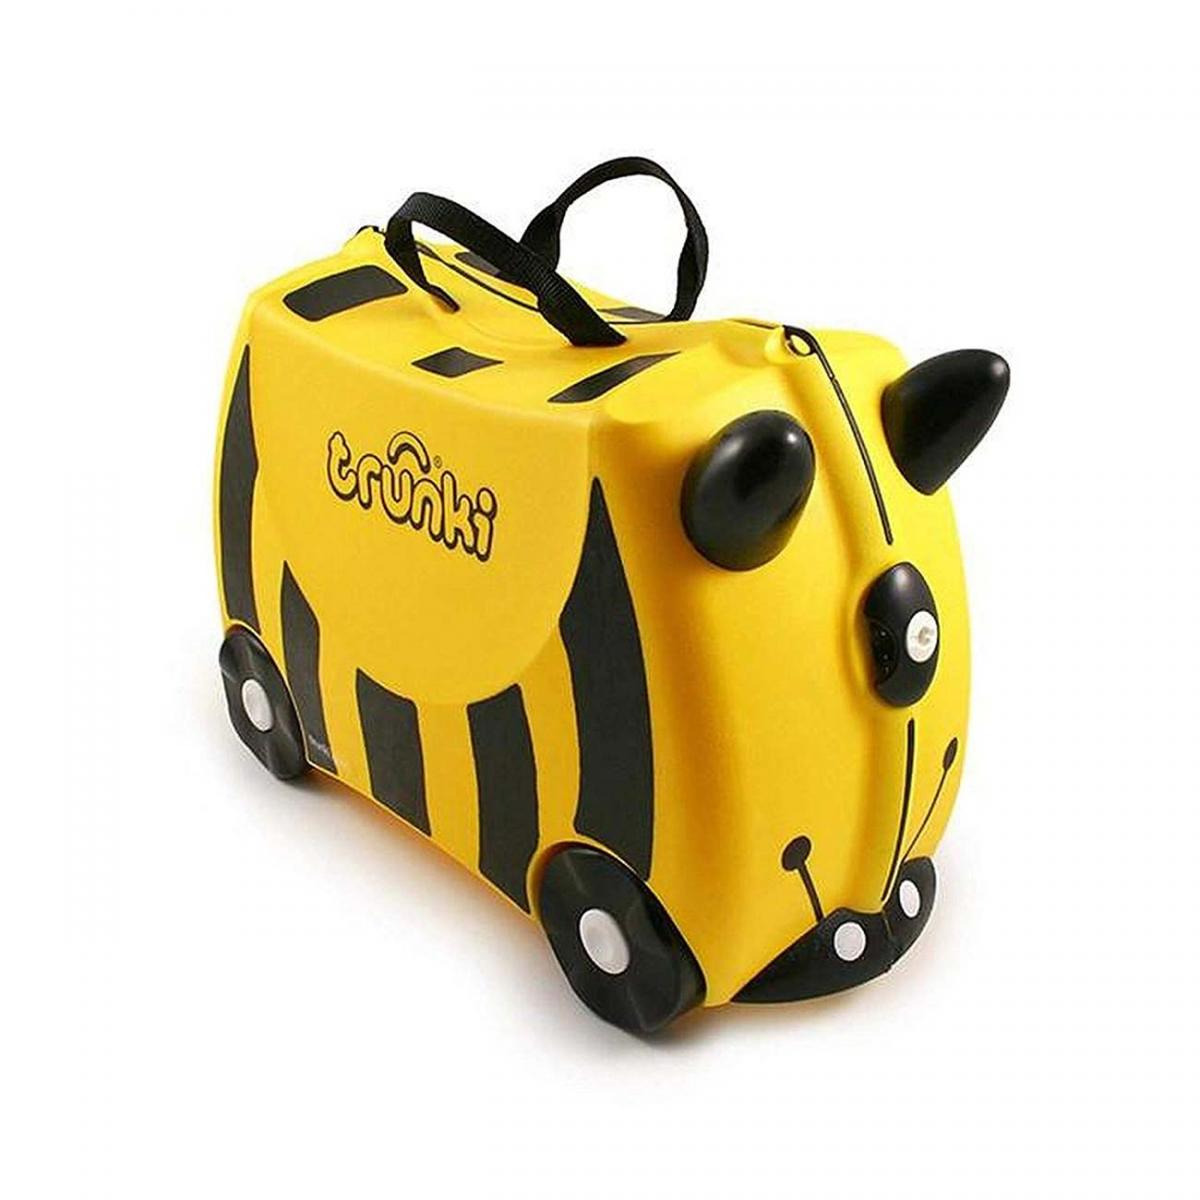 Trunki Original Kids Ride-on Suitcase